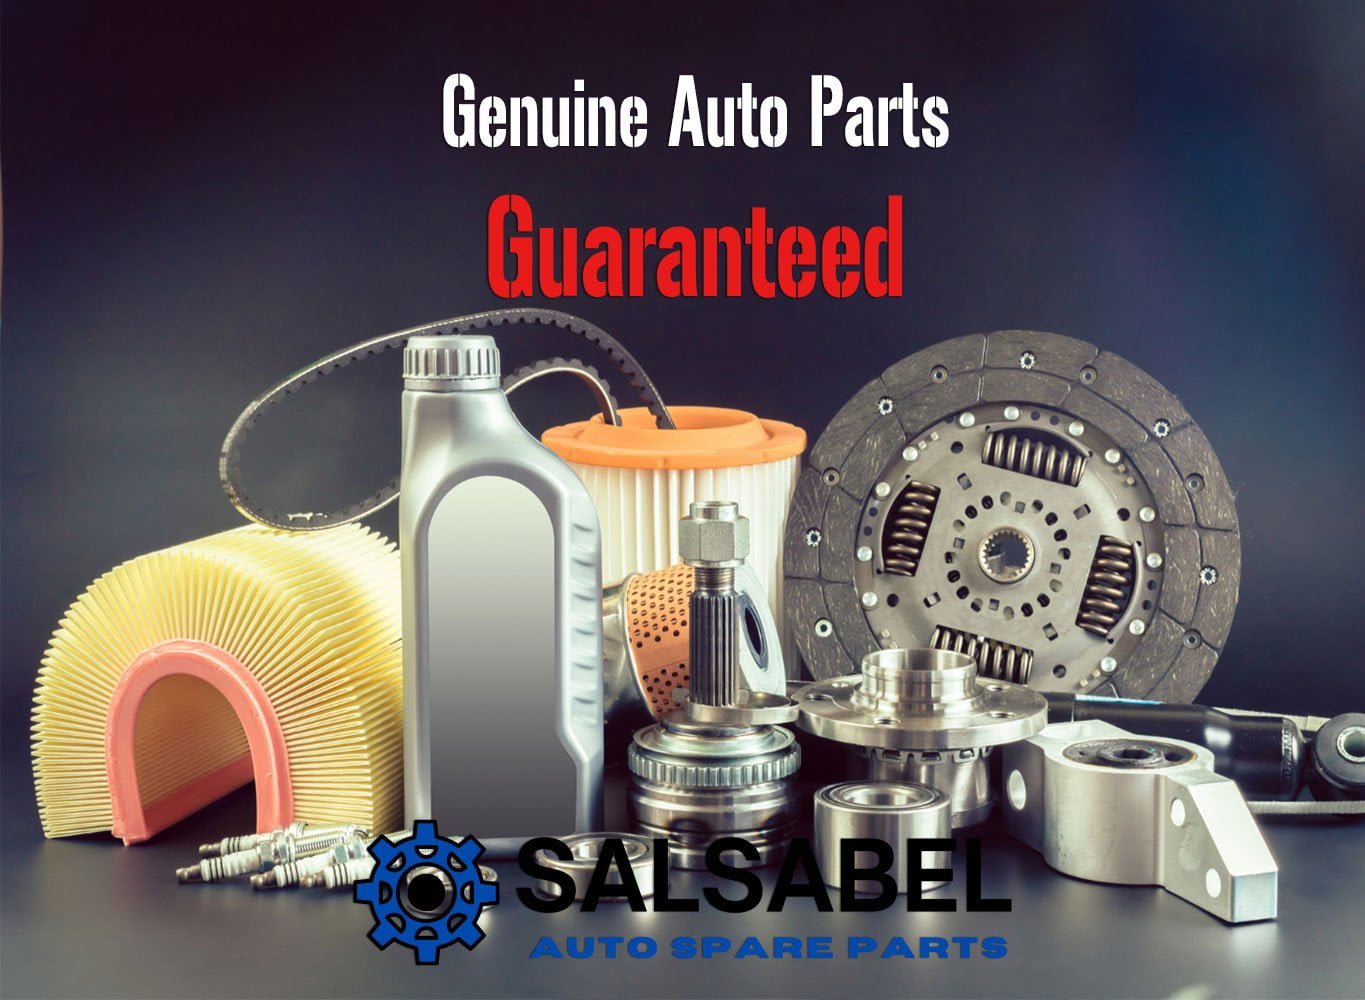 Salsabel-Genuine-Car-Parts-Spares-Accesoires-Genuine